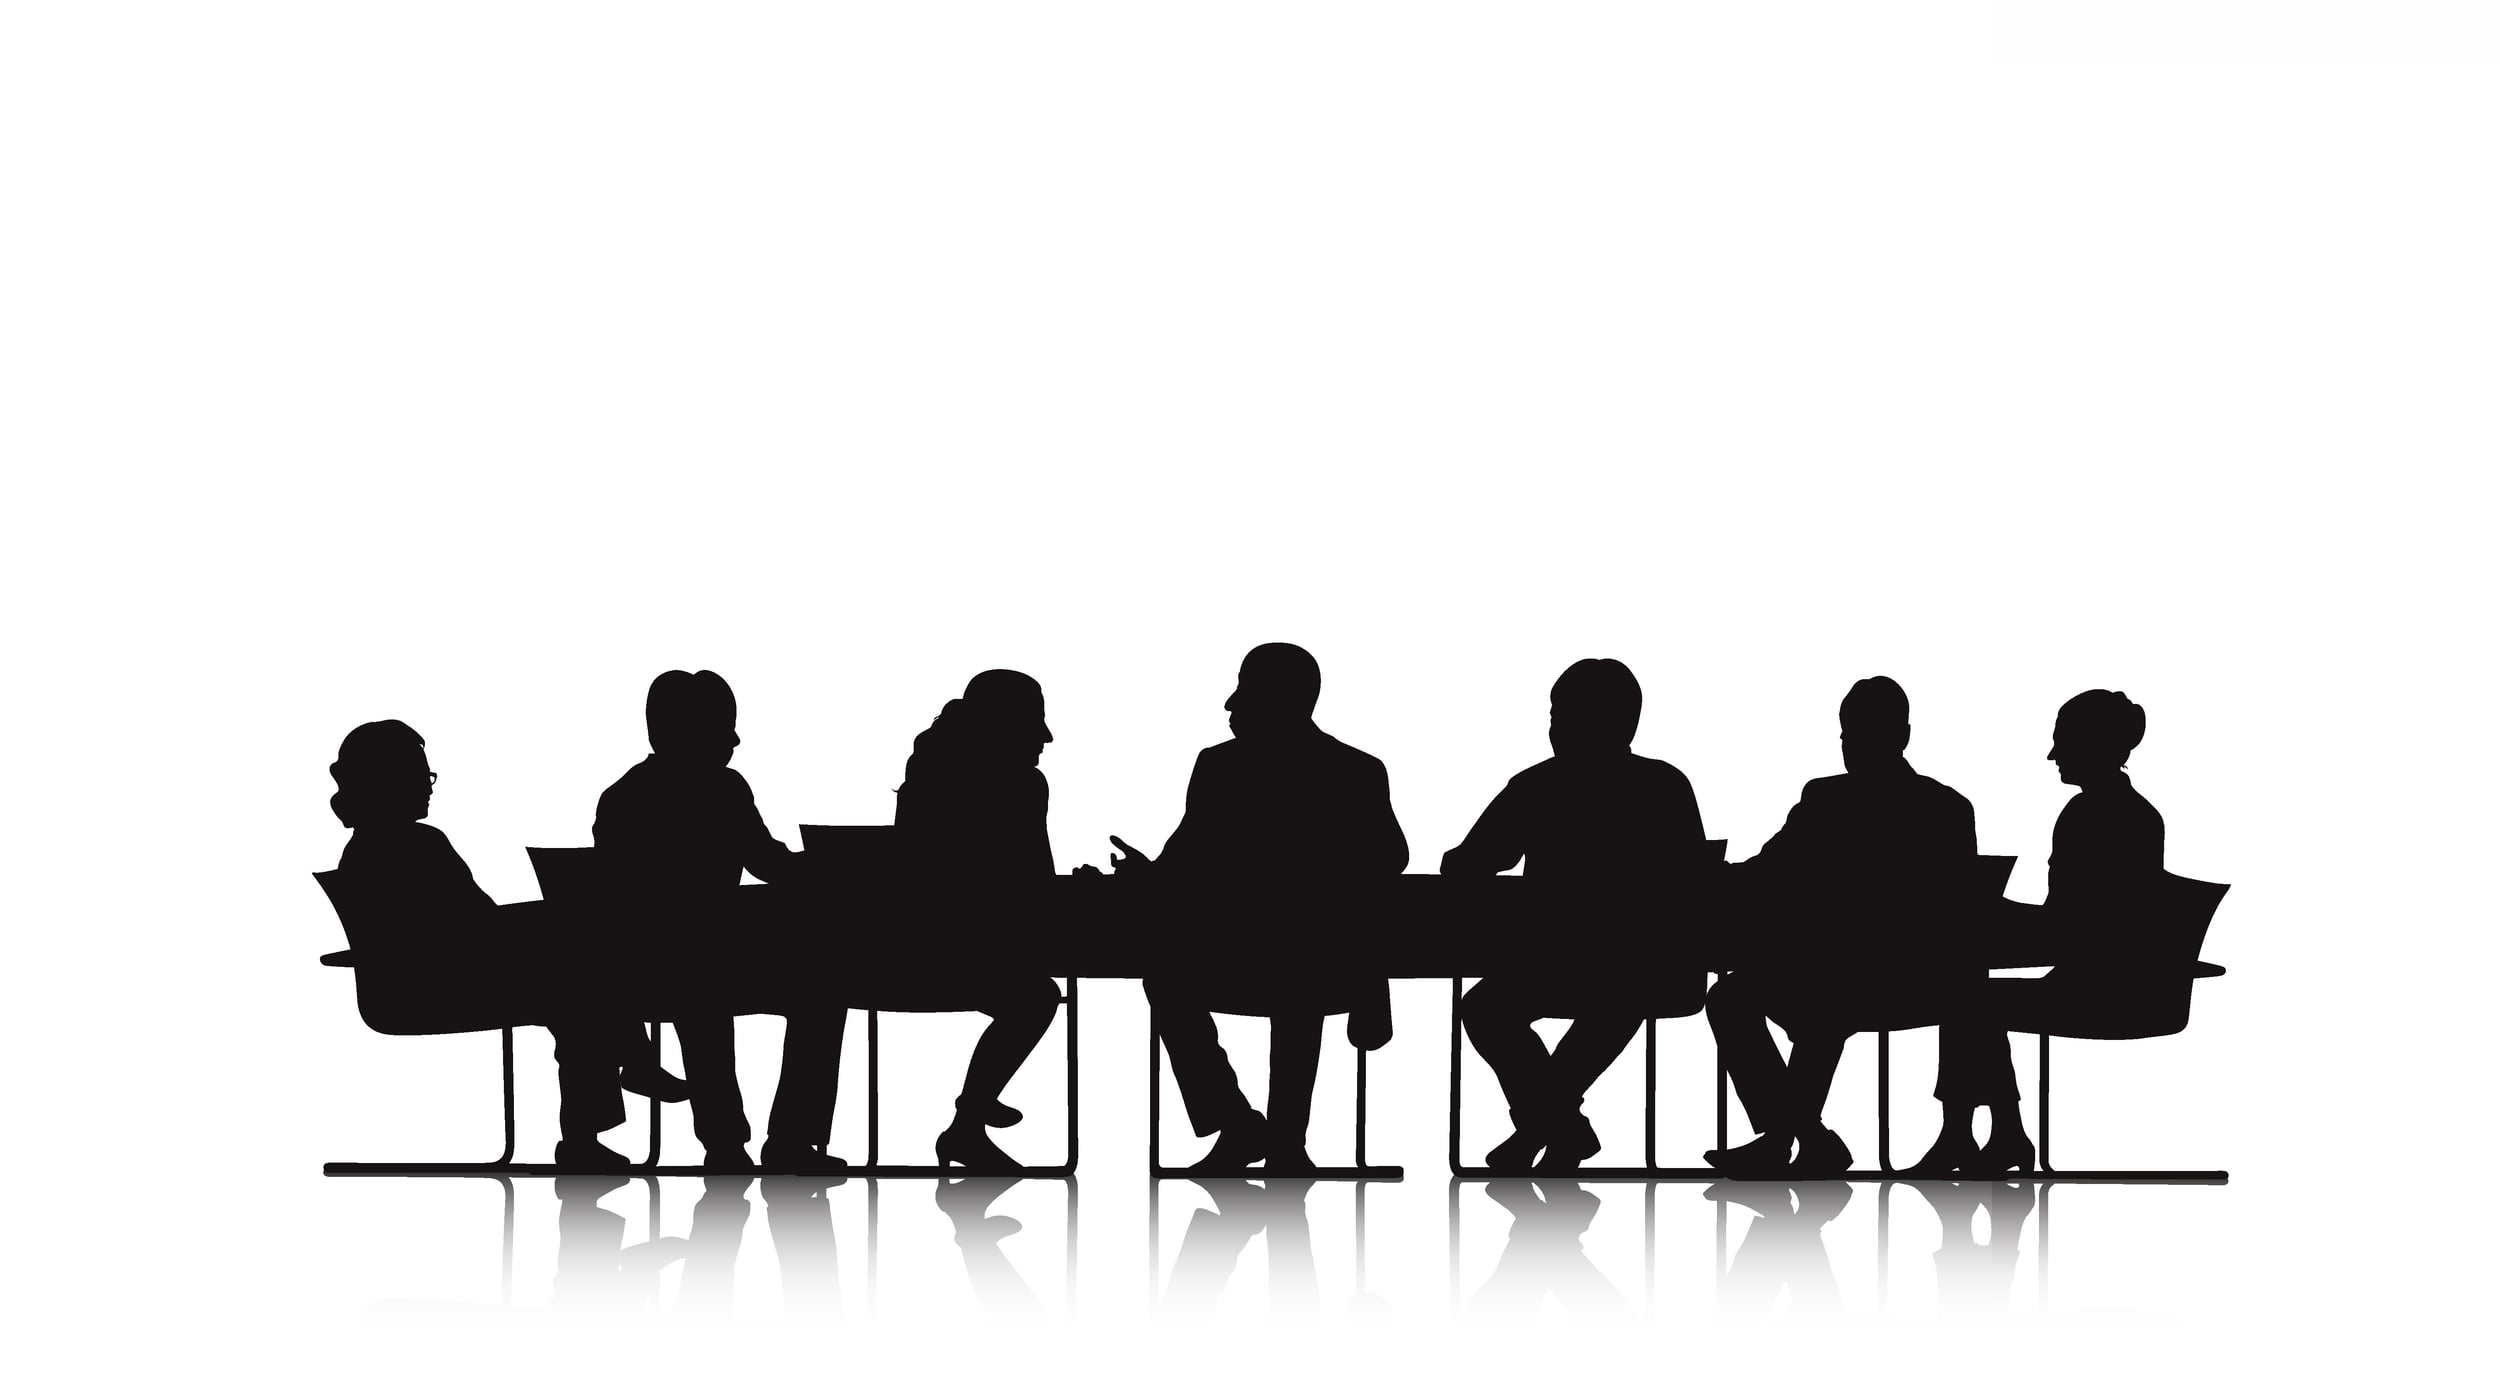 Filling the governance gap: multi-stakeholder standard-setting -- The Board of Directors